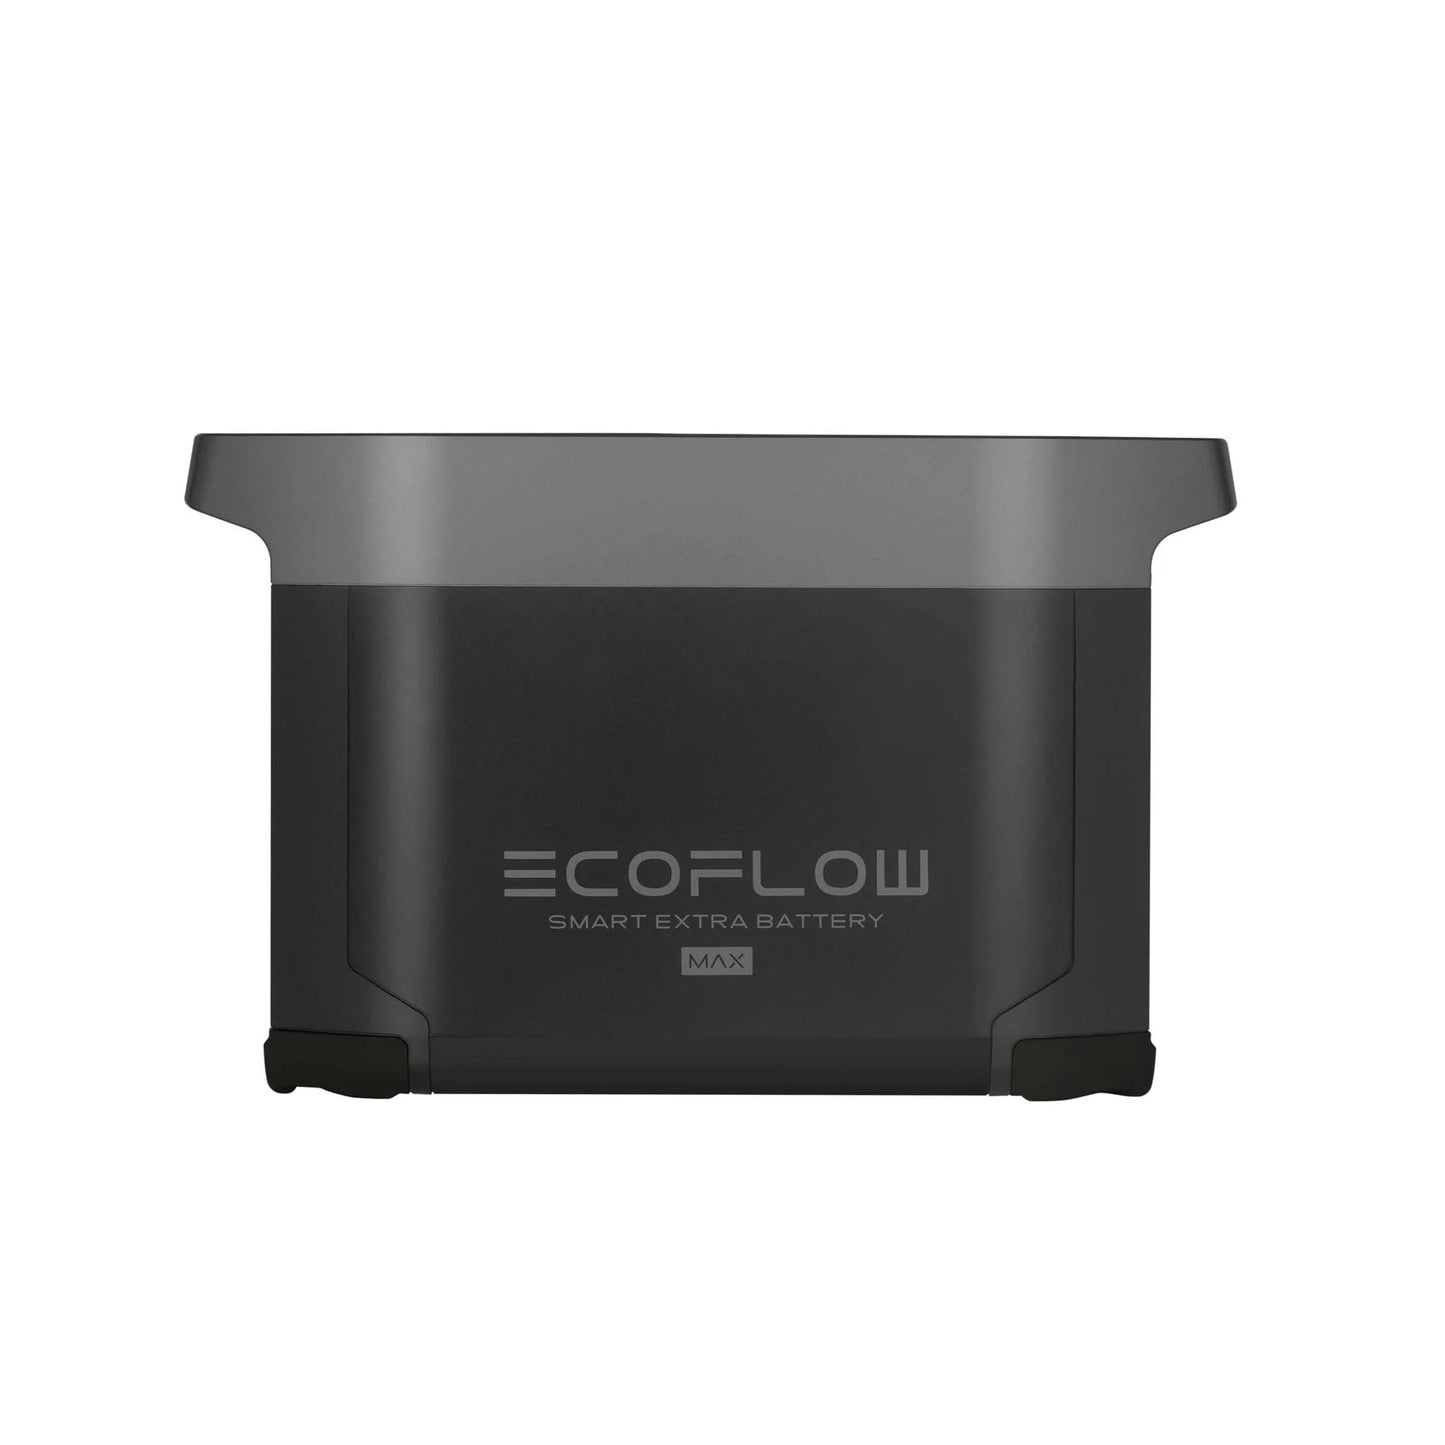 EcoFlow DELTA Max Smart Extra Battery (batterie supplémentaire intelligente DELTA Max)